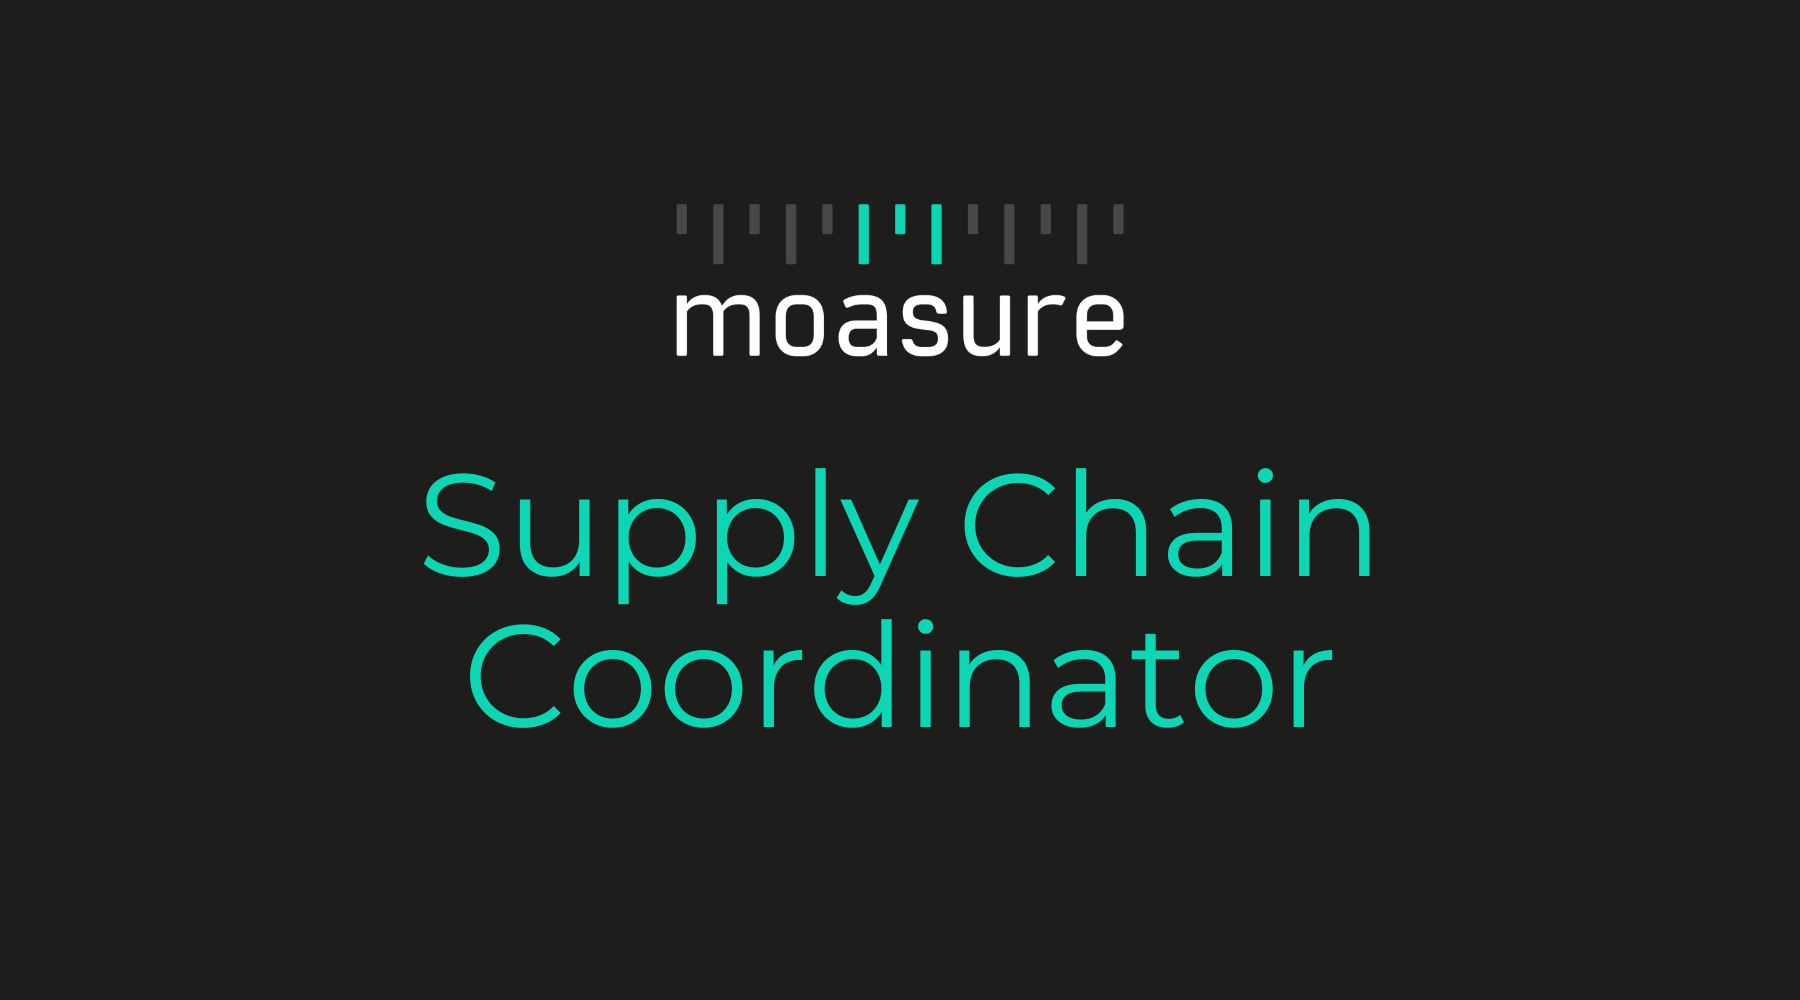 Supply Chain Coordinator